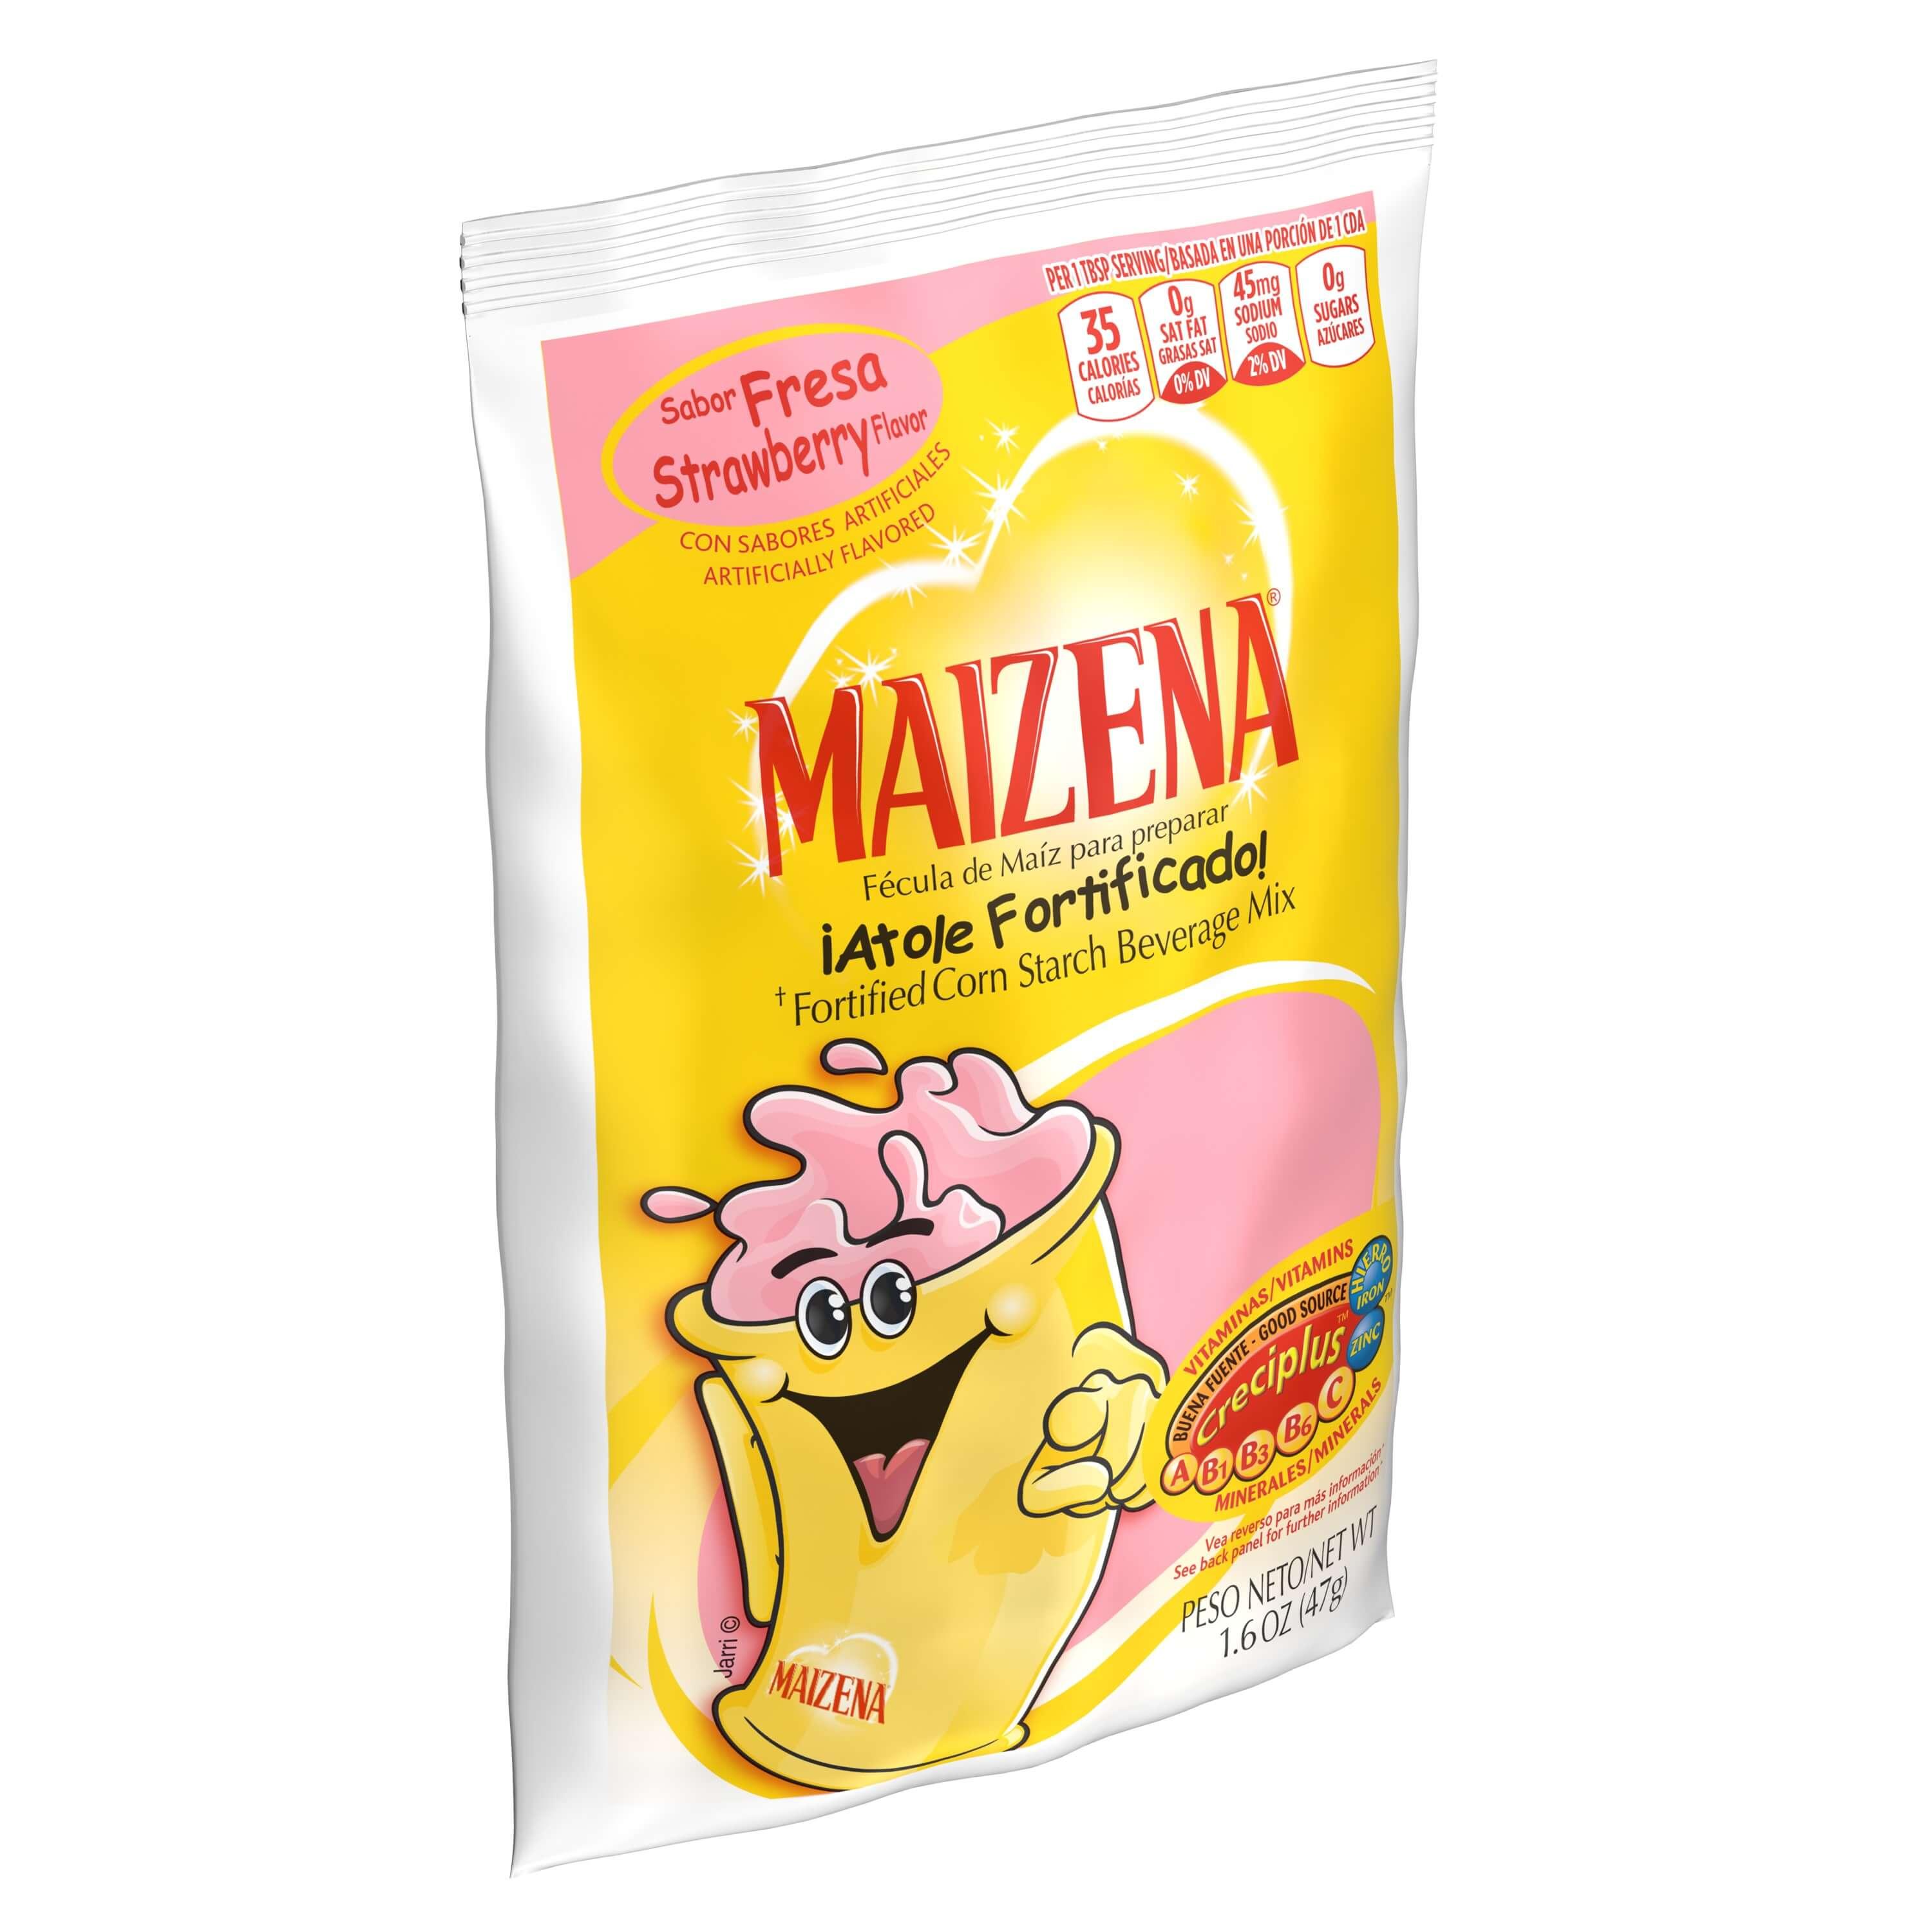 Maizena - Fortified Corn Starch Beverage Mix, Strawberry Flavor 1.6 oz